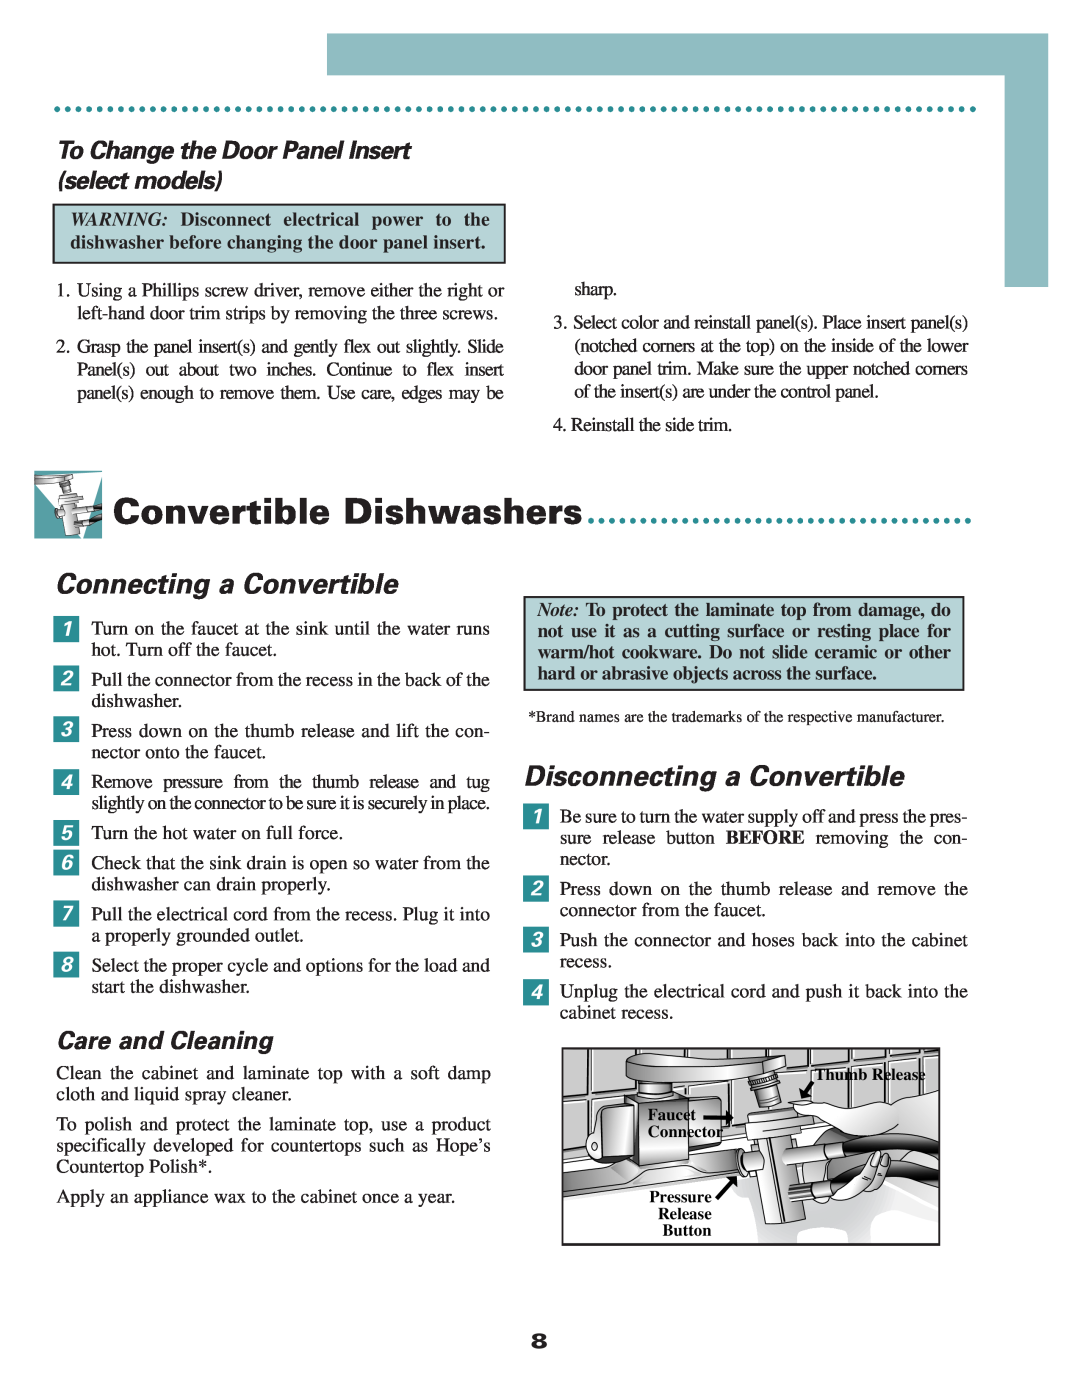 Maytag MDC4100, MDB3100 Convertible Dishwashers, Connecting a Convertible, Disconnecting a Convertible, Care and Cleaning 